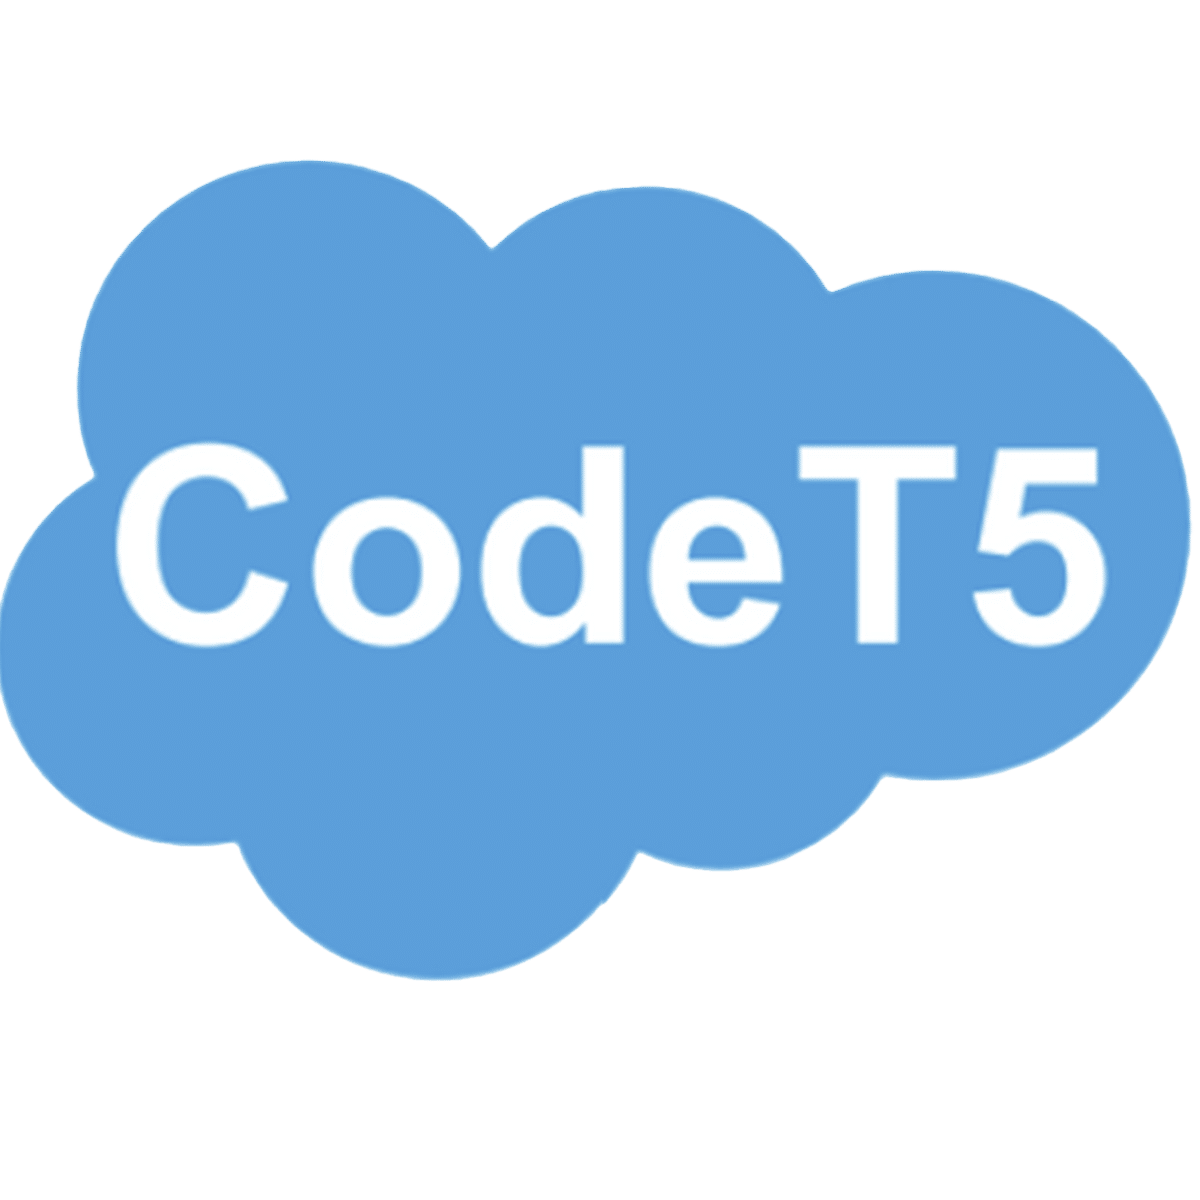 Code T5